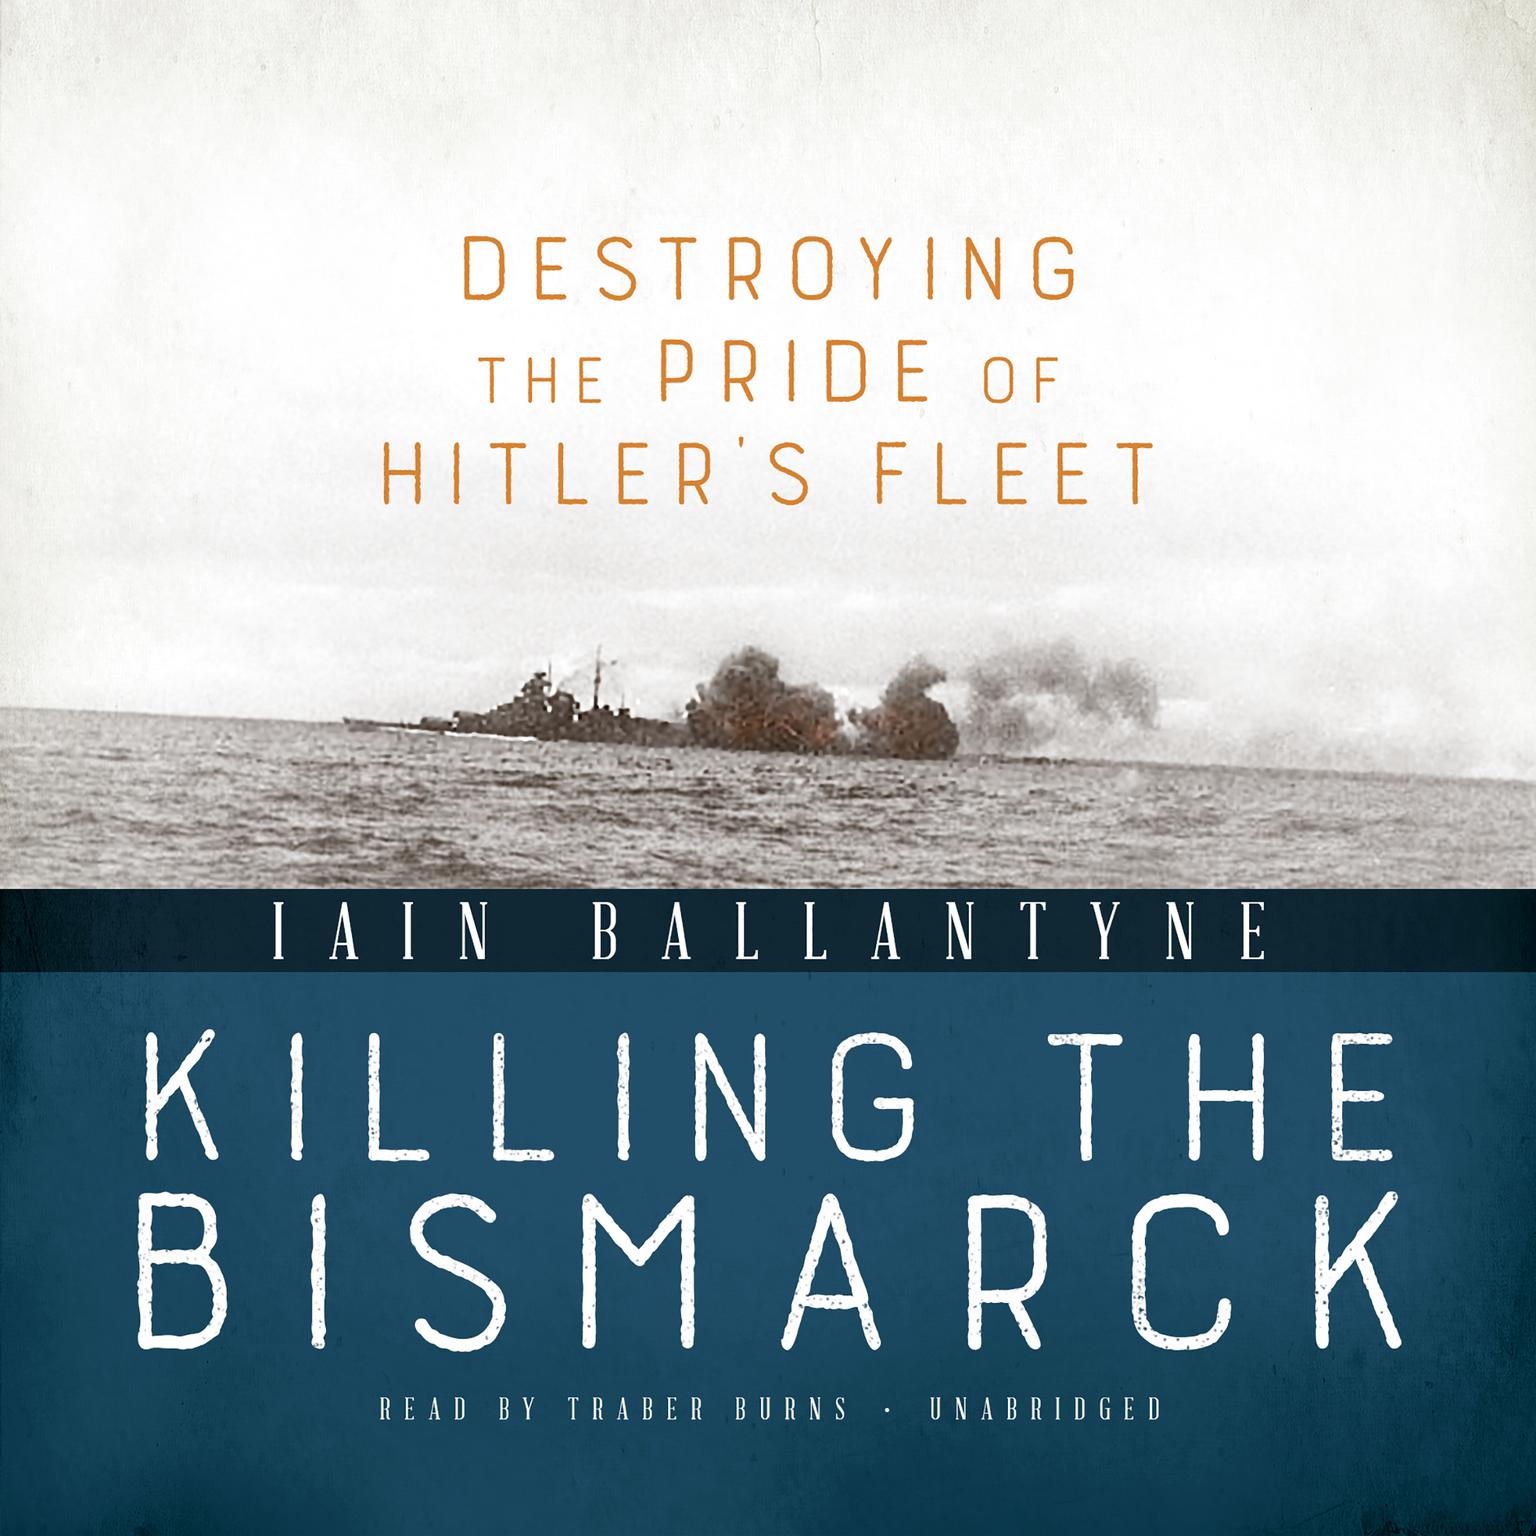 Killing the Bismarck: Destroying the Pride of Hitler’s Fleet Audiobook, by Iain Ballantyne